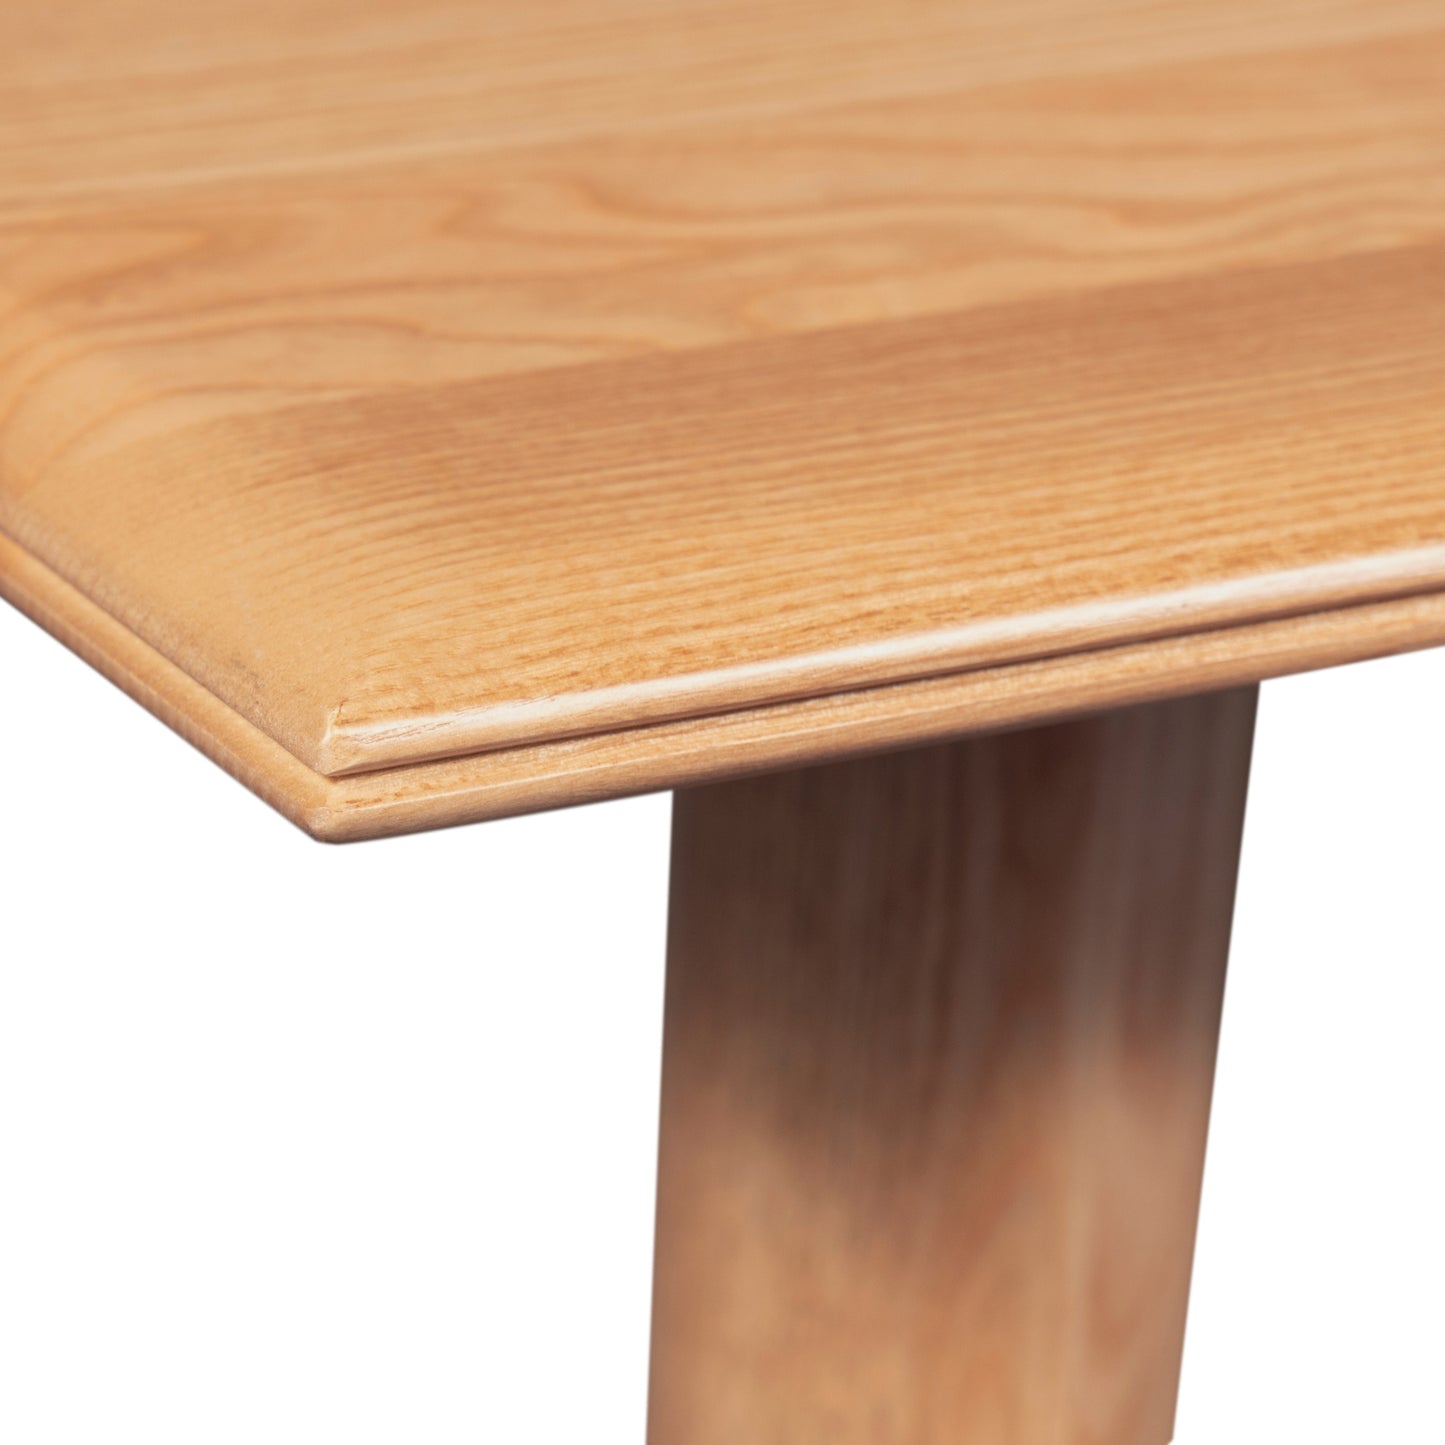 Emilio 7pc 180cm Dining Table Set Fabric Chair Solid Ash Wood Oak